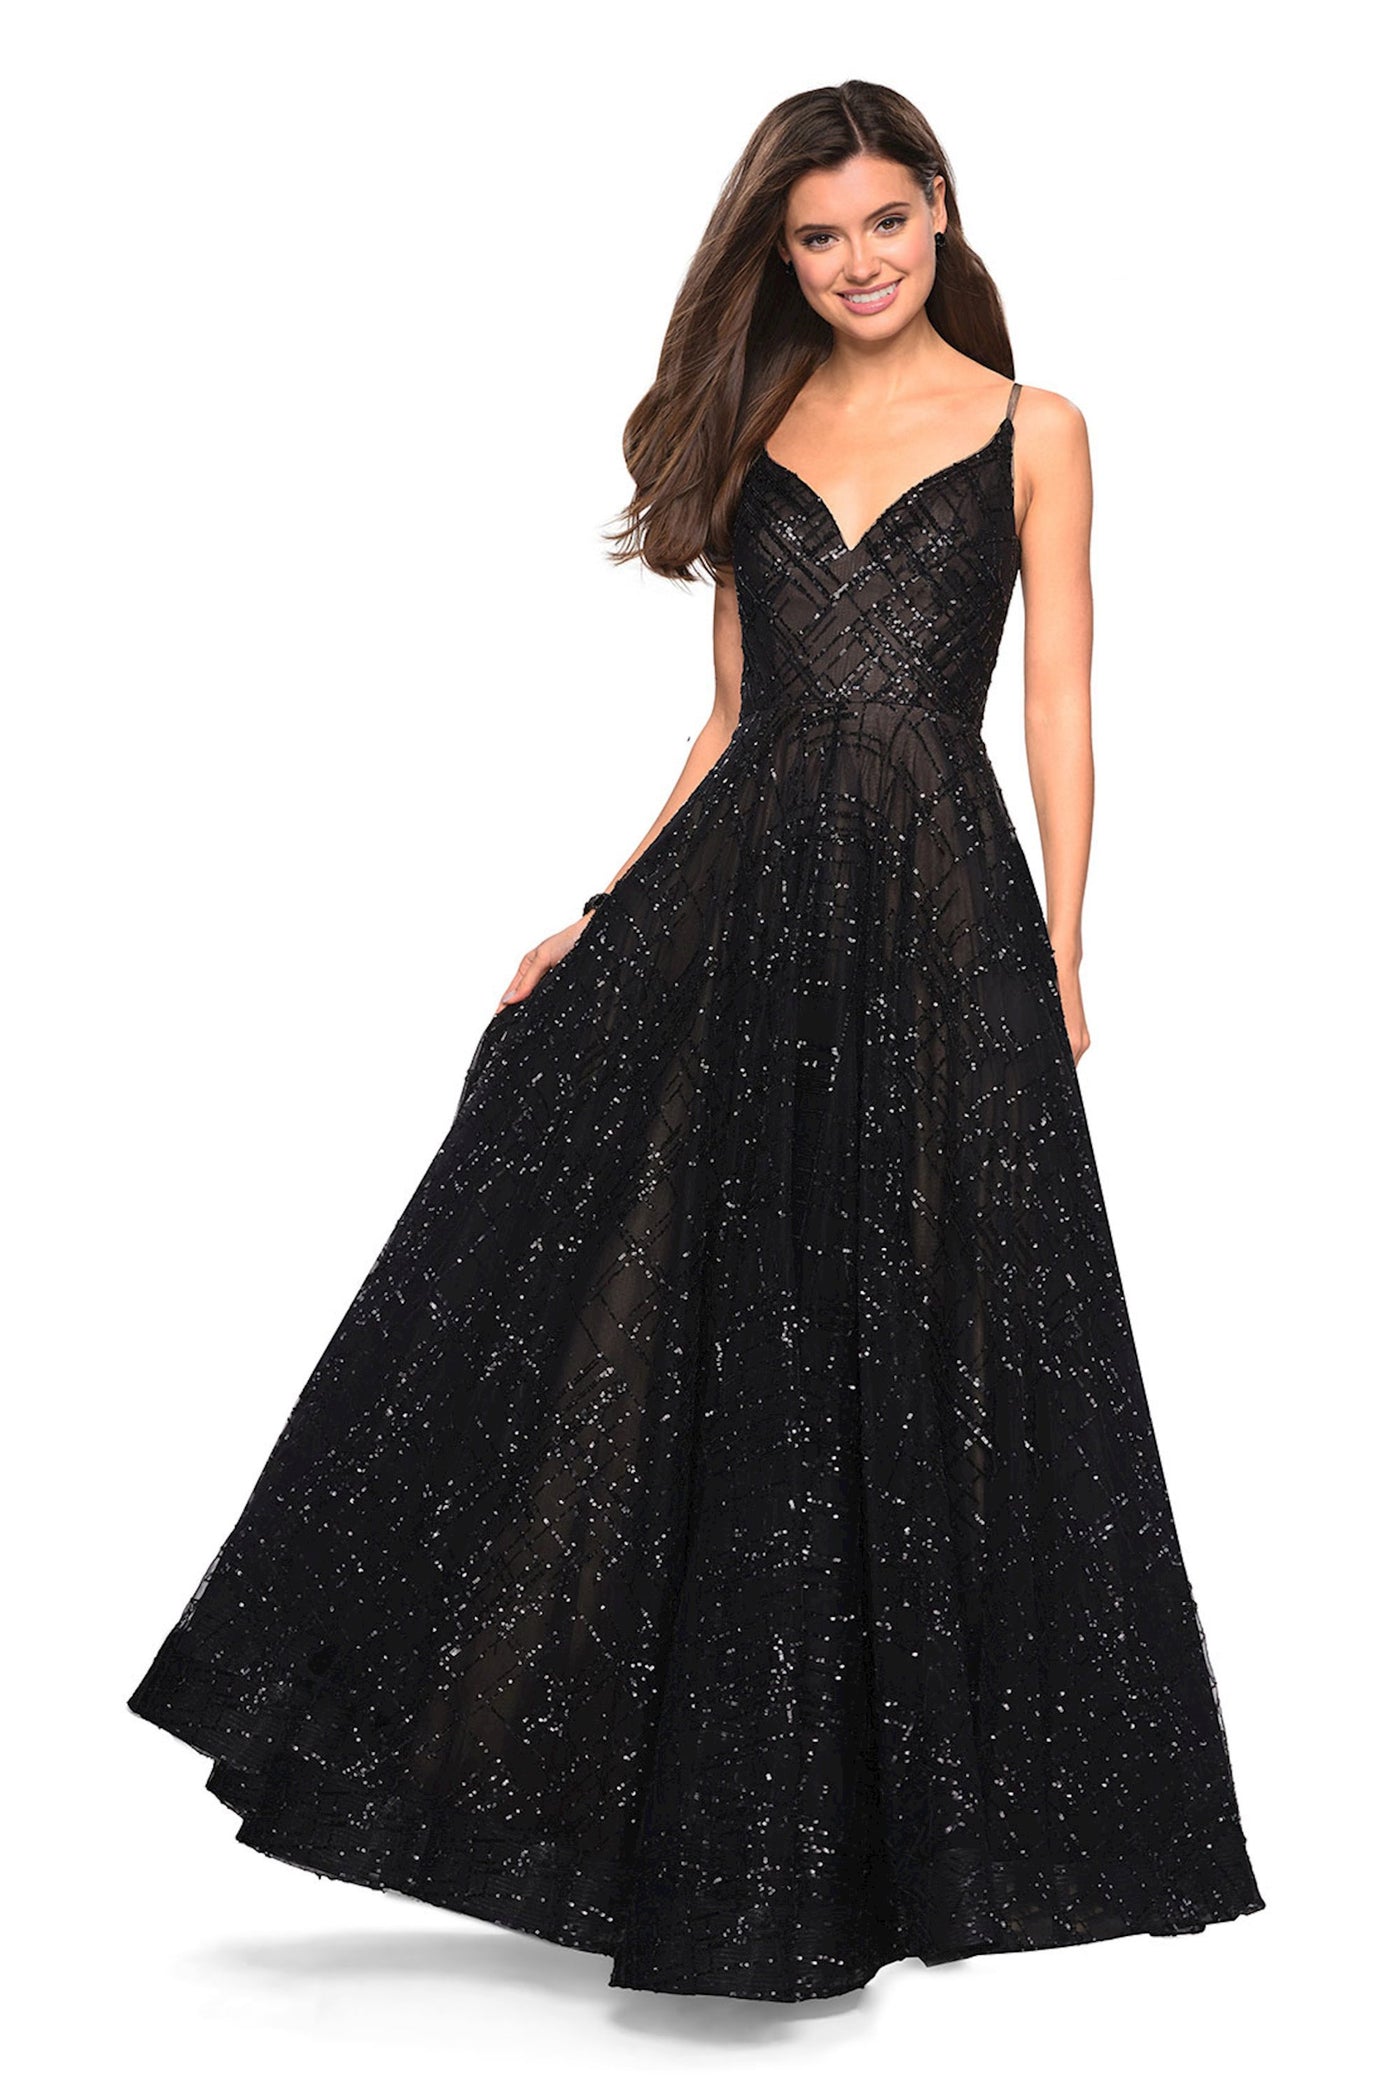 La Femme - Sparkling Sequin Sleeveless A-Line Dress 27199 In Black